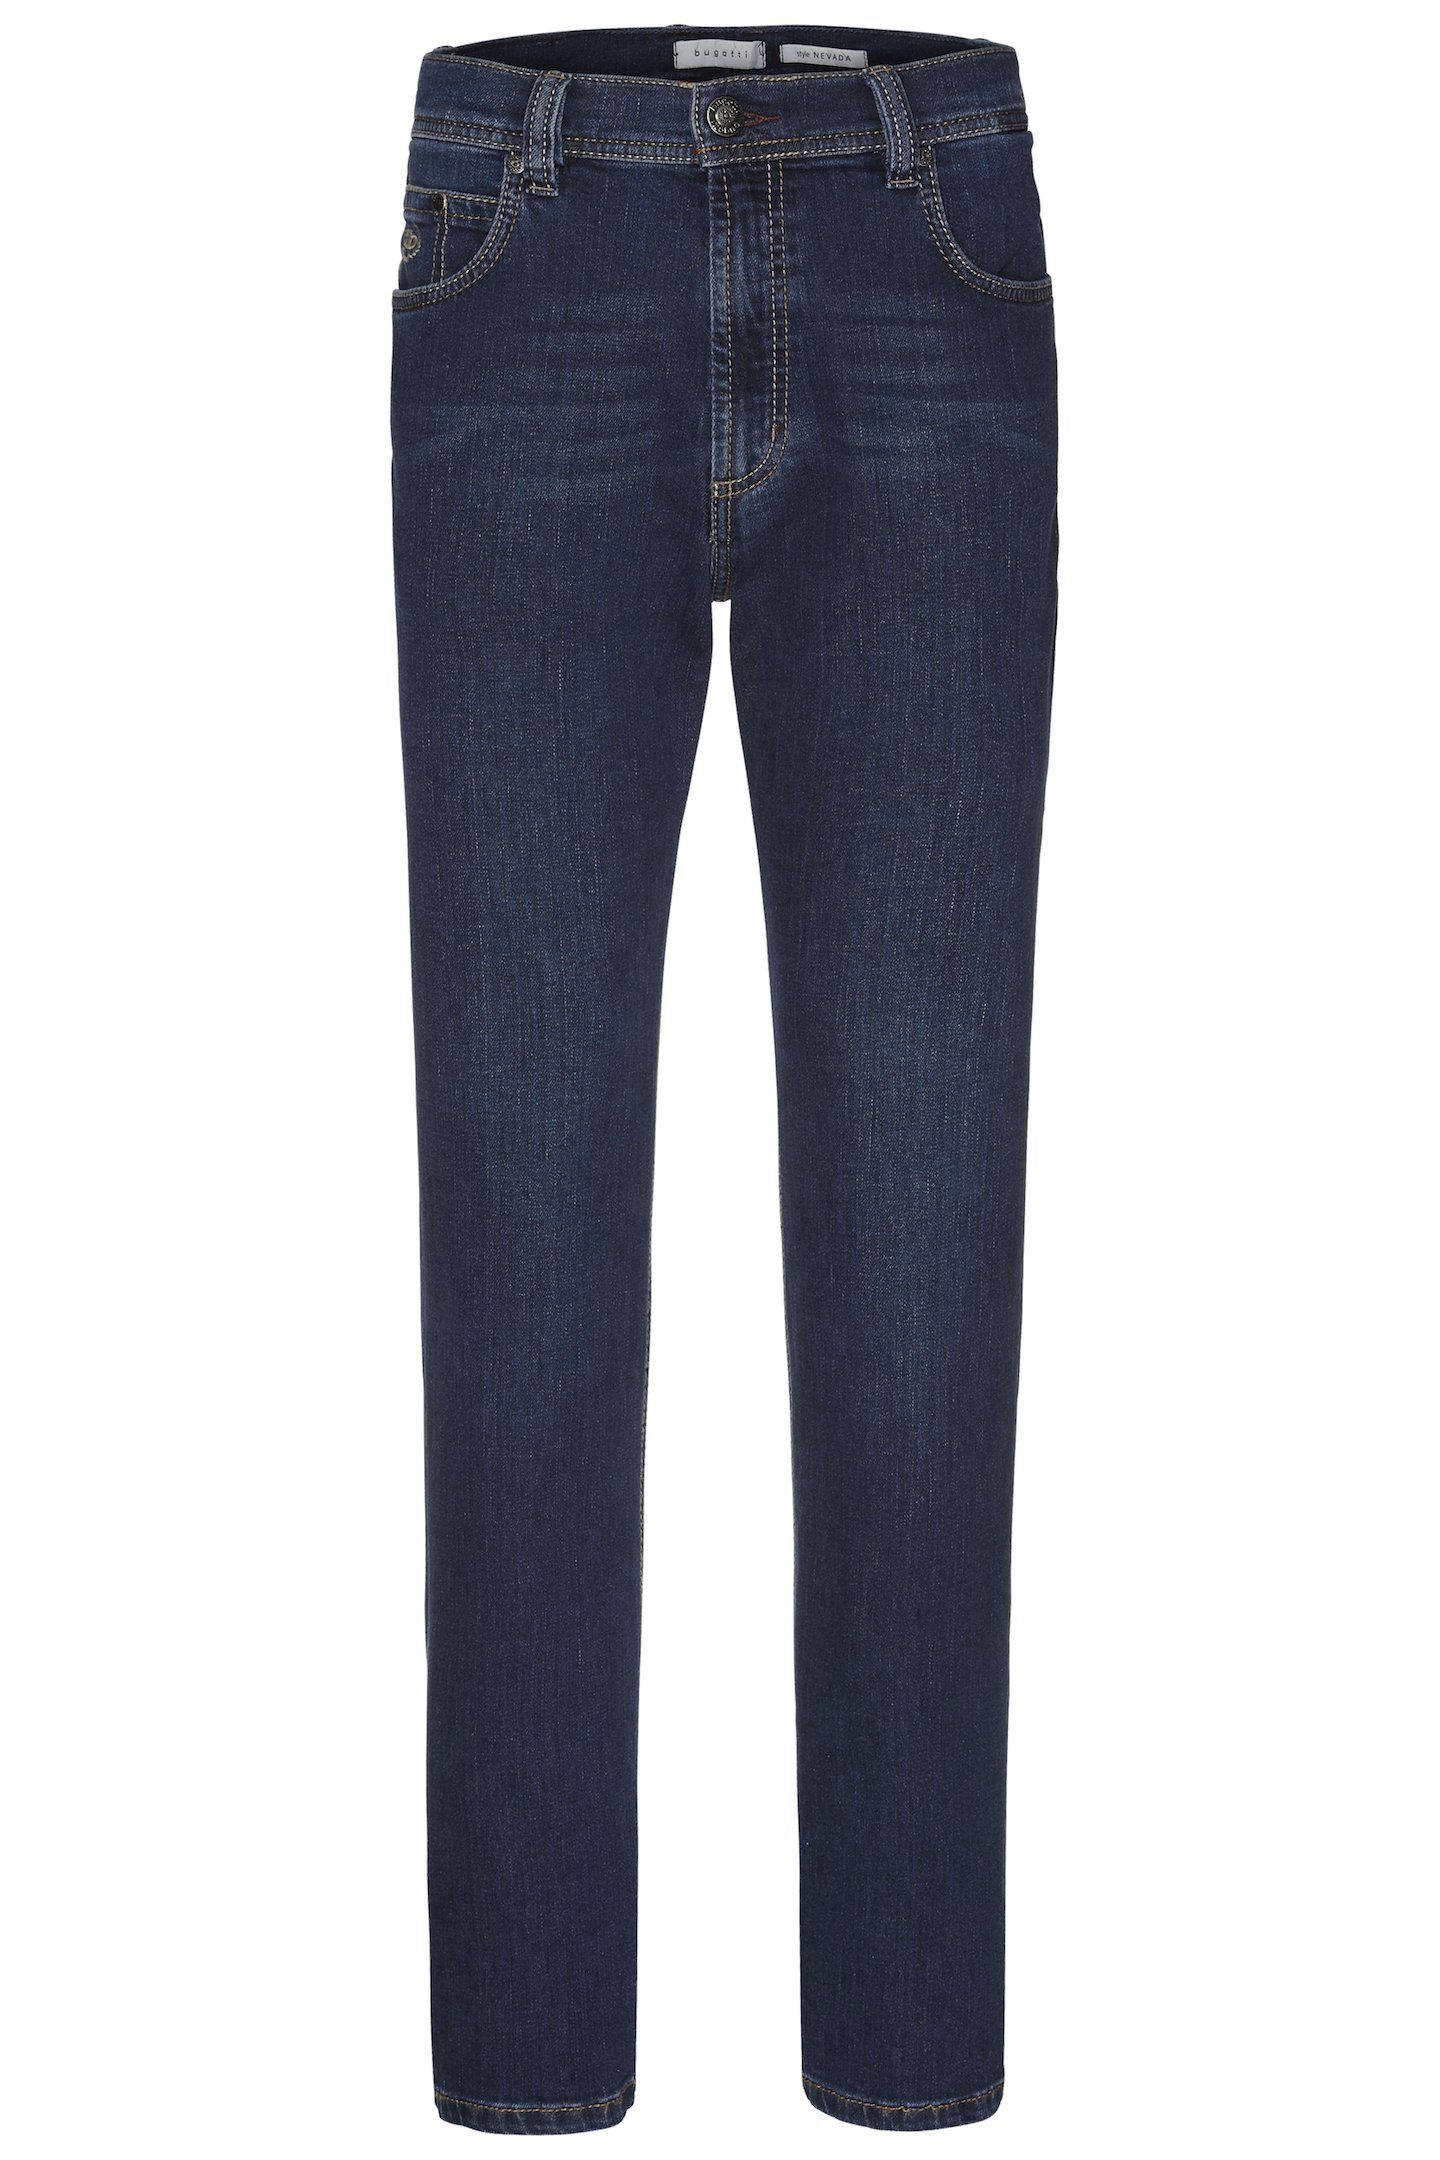 Stretch mit bugatti blau stone 5-Pocket-Jeans Comfort